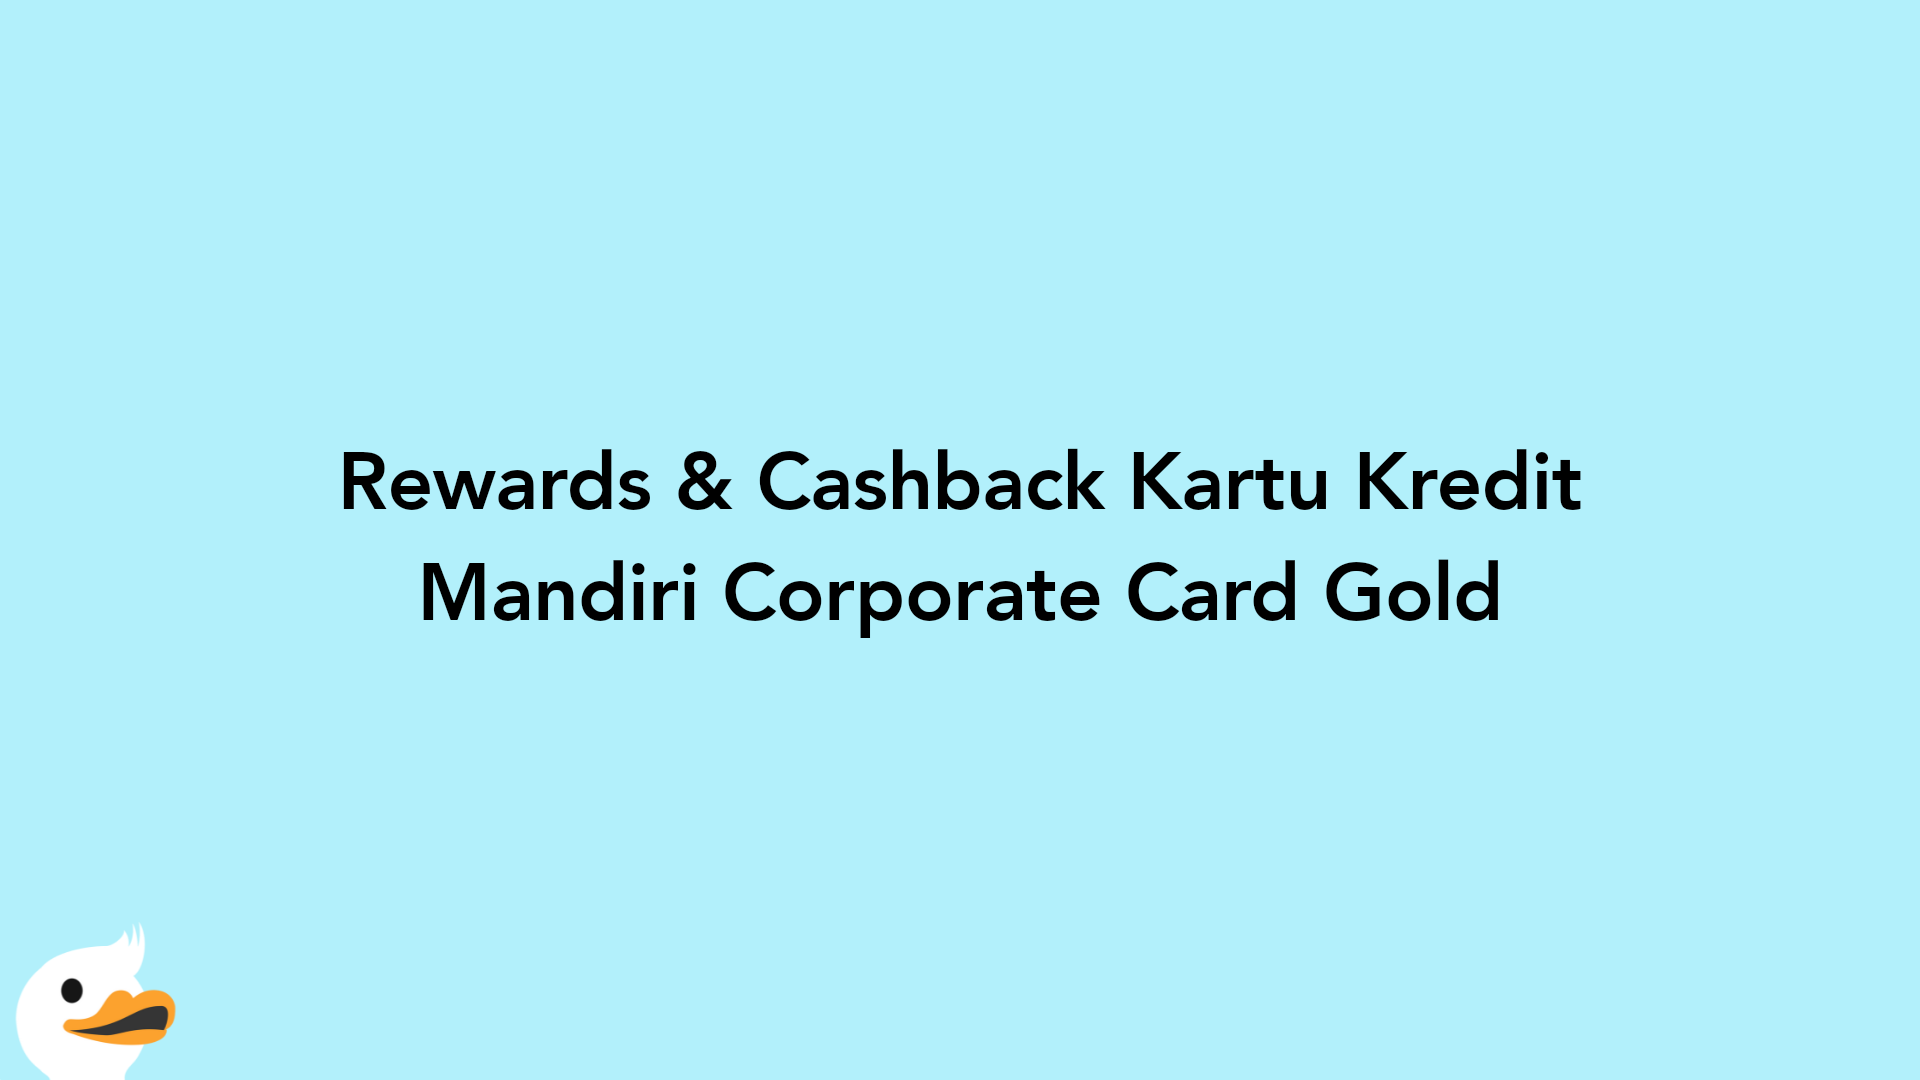 Rewards & Cashback Kartu Kredit Mandiri Corporate Card Gold